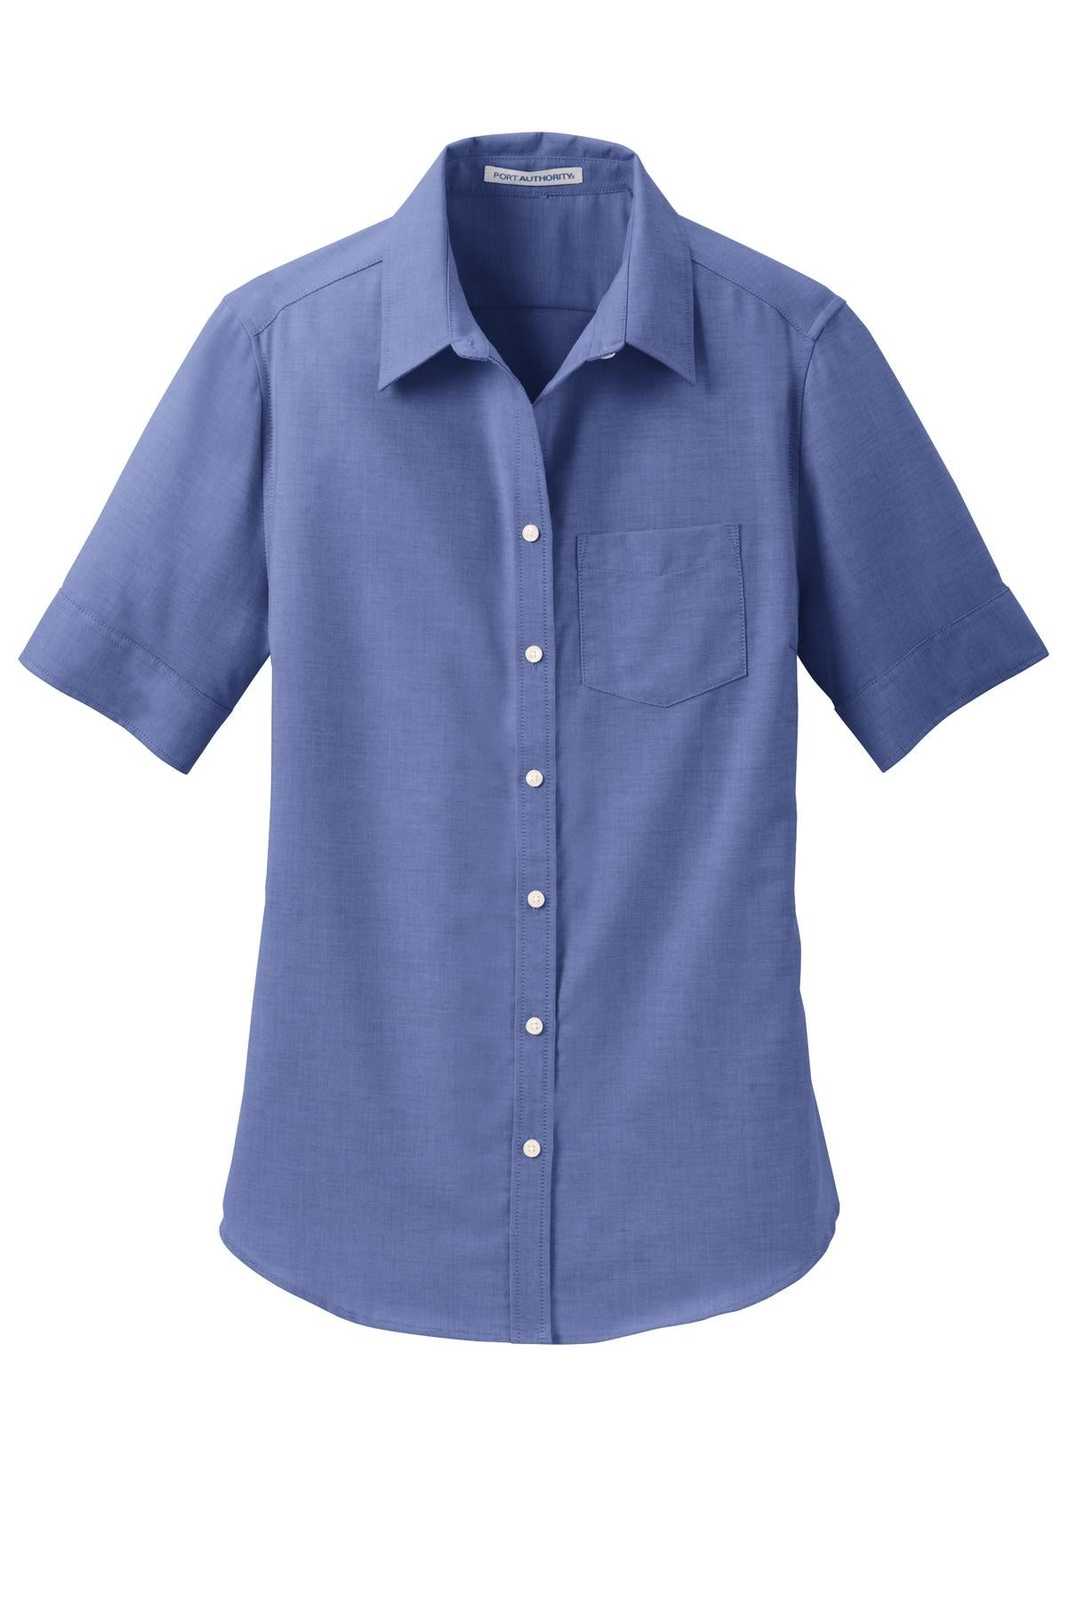 Port Authority L659 Ladies Short Sleeve Superpro Oxford Shirt - Navy - HIT a Double - 5